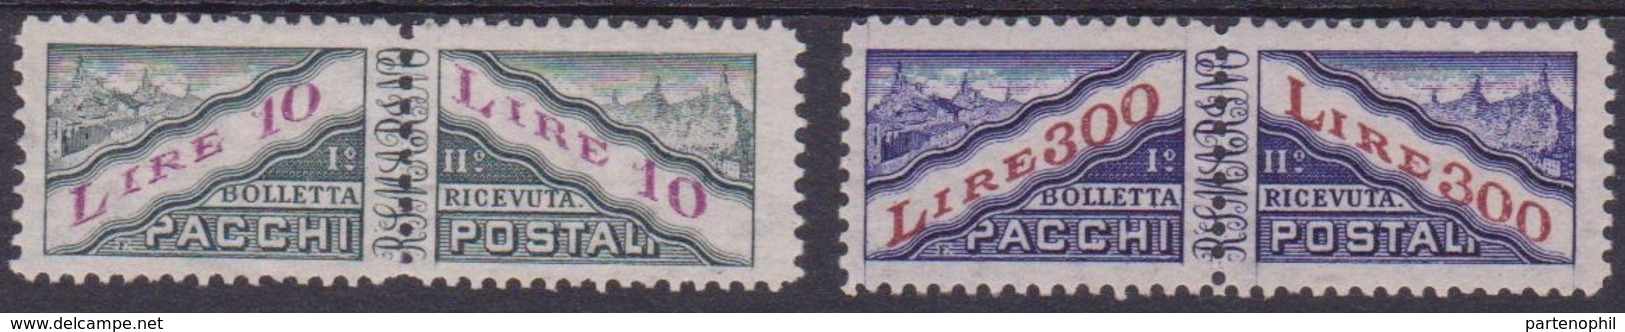 San Marino 1953 - Pacchi Postali N.35/35 Lire 10 + Lire 300 MNH - Cert. Bolaffi - Colis Postaux